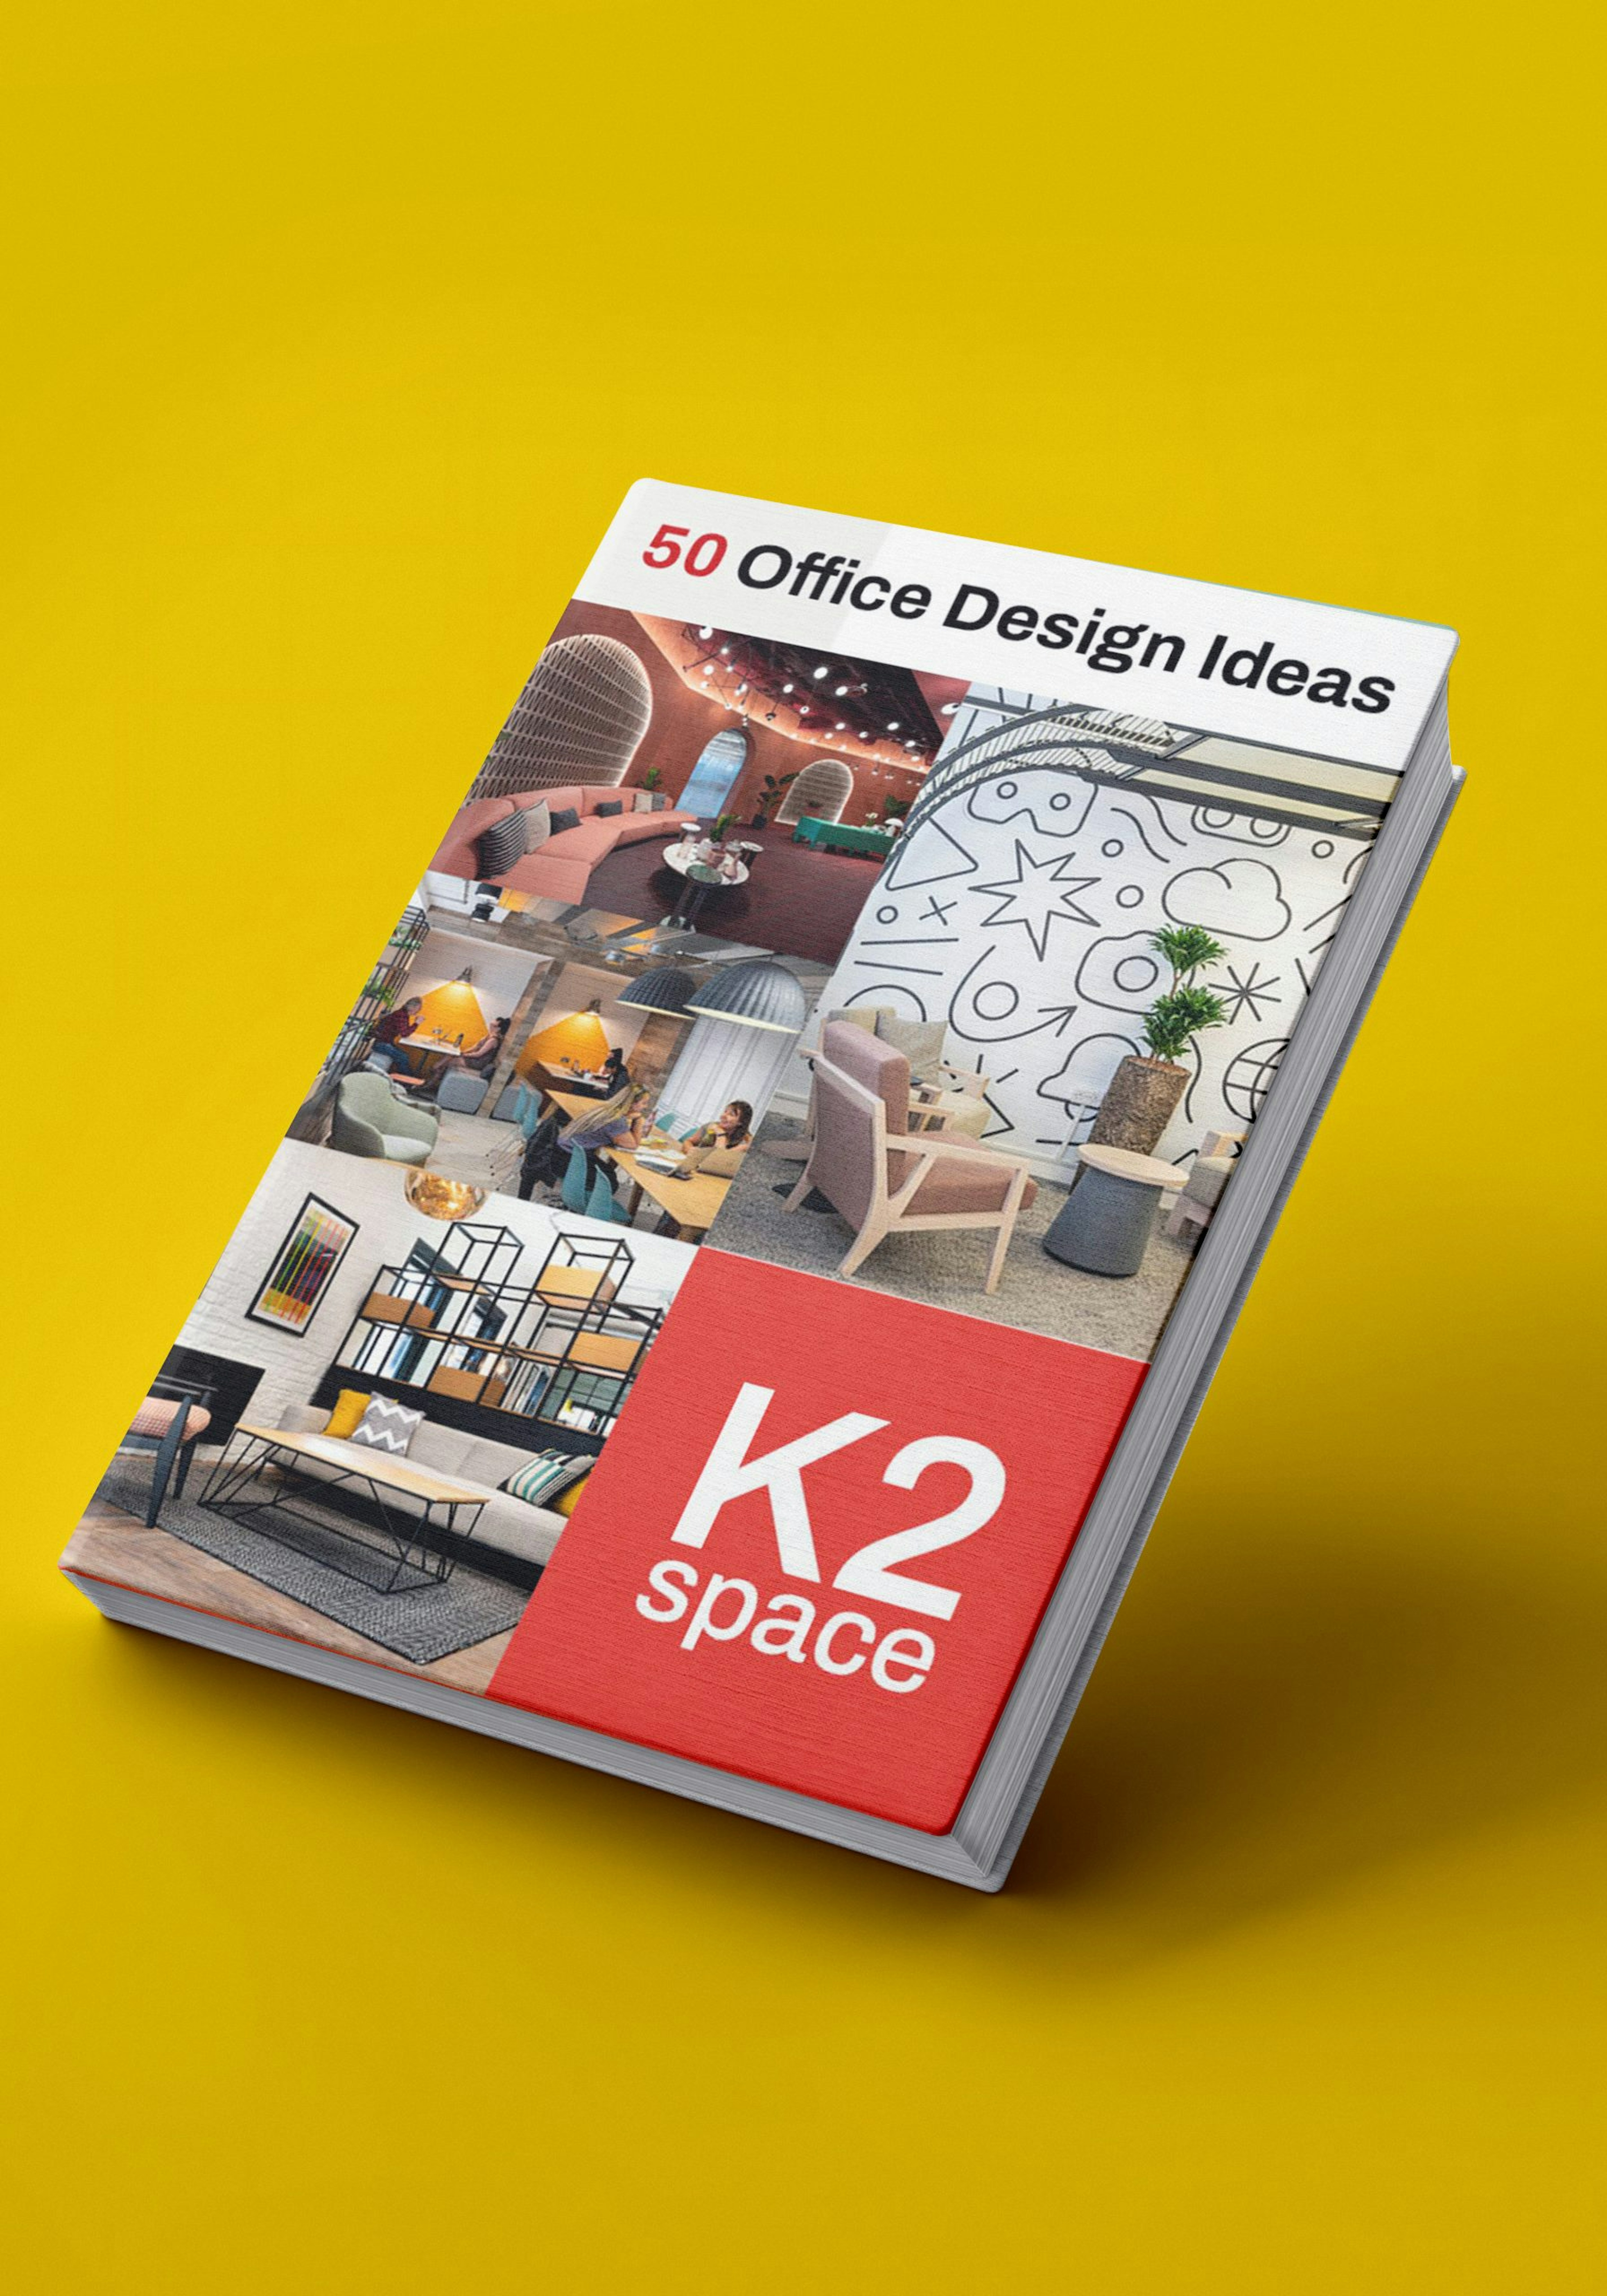 50-office-design-ideas-hardcover-book-mockup